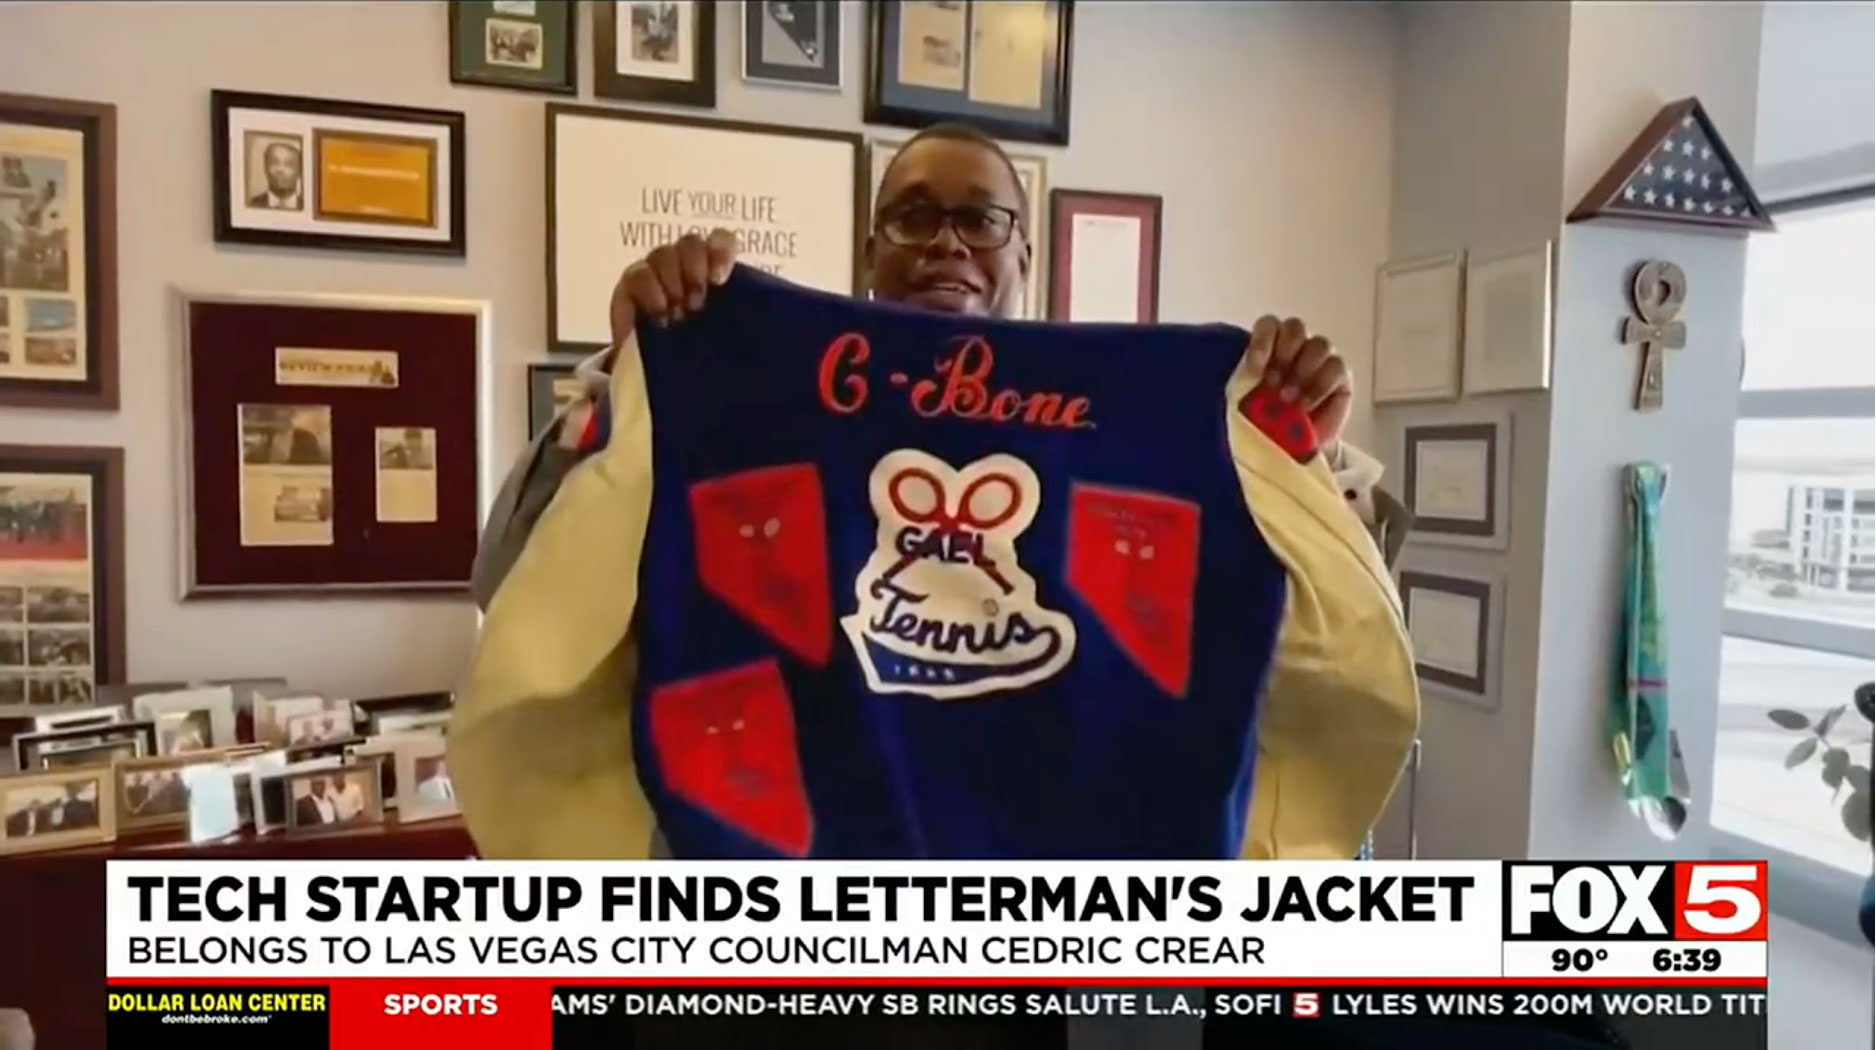 A tech startup helped find a Las Vegas City Councilman's letterman's jacket.